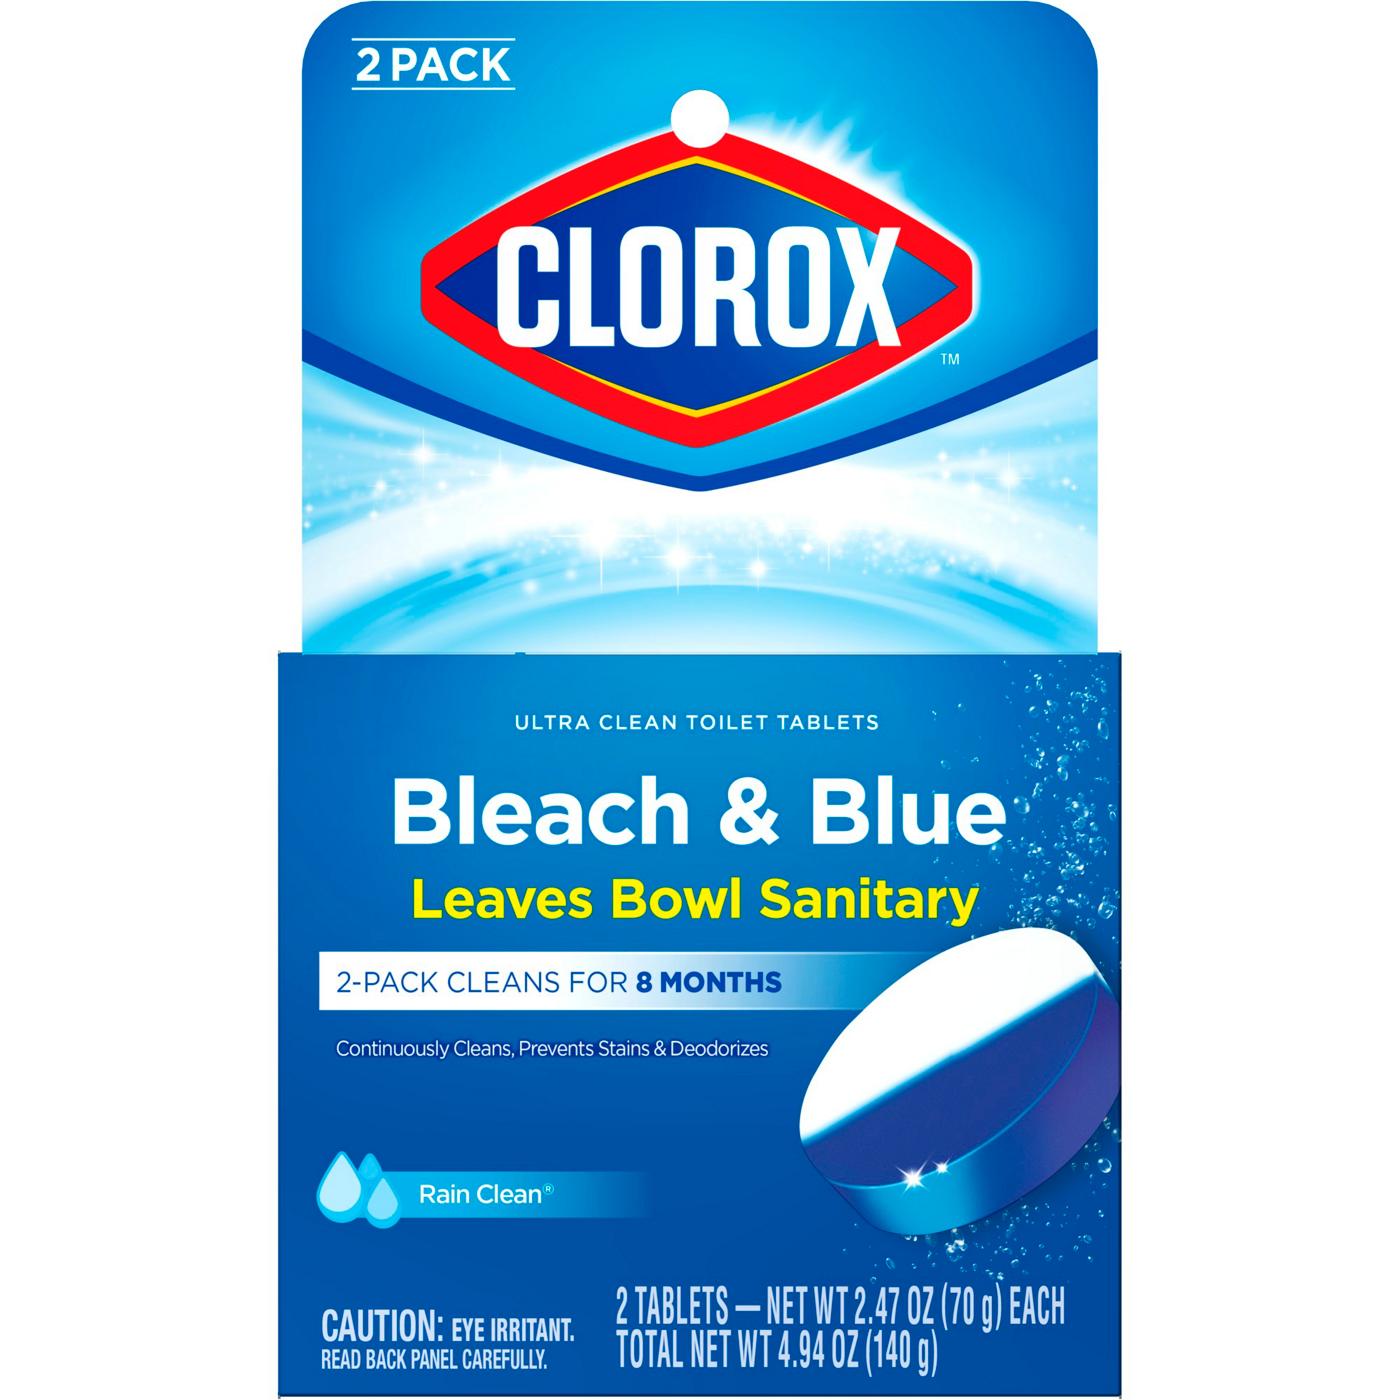 Clorox Bleach & Blue Ultra Clean Toilet Tablets Rain Clean Scent; image 1 of 9